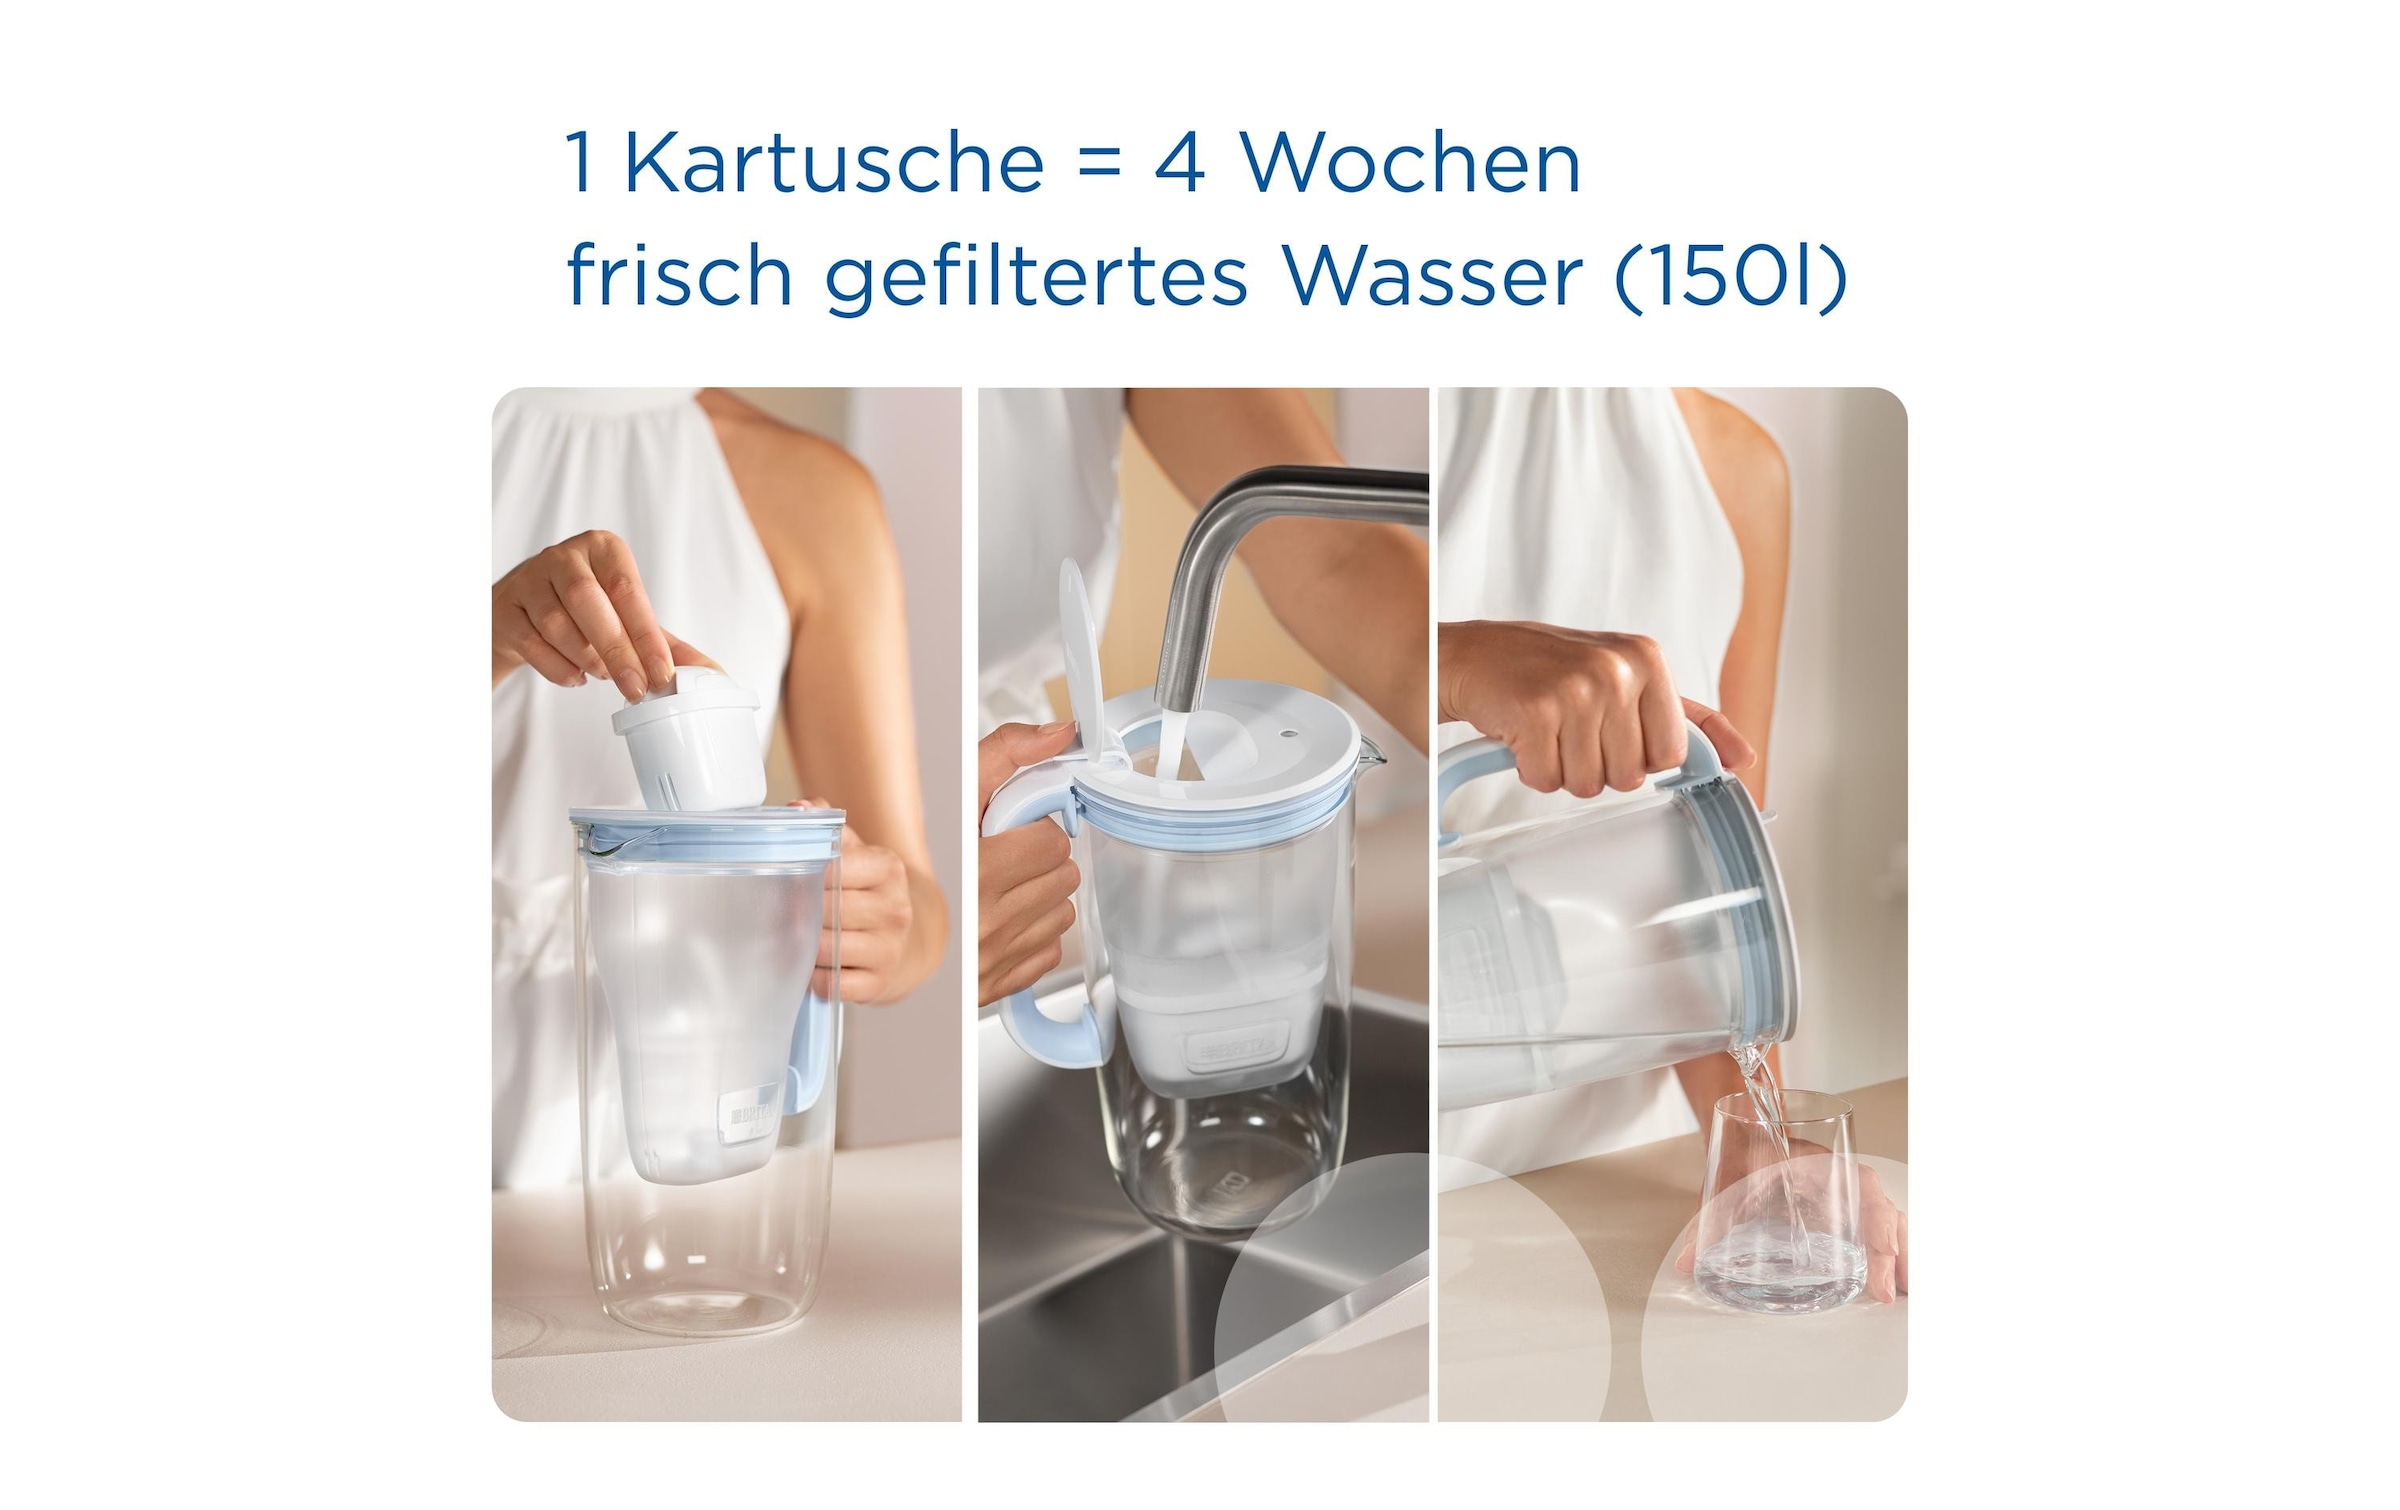 BRITA Wasserfilter »Maxtra Pro Extra Kalkschutz, 3er Pack«, (3 tlg.)